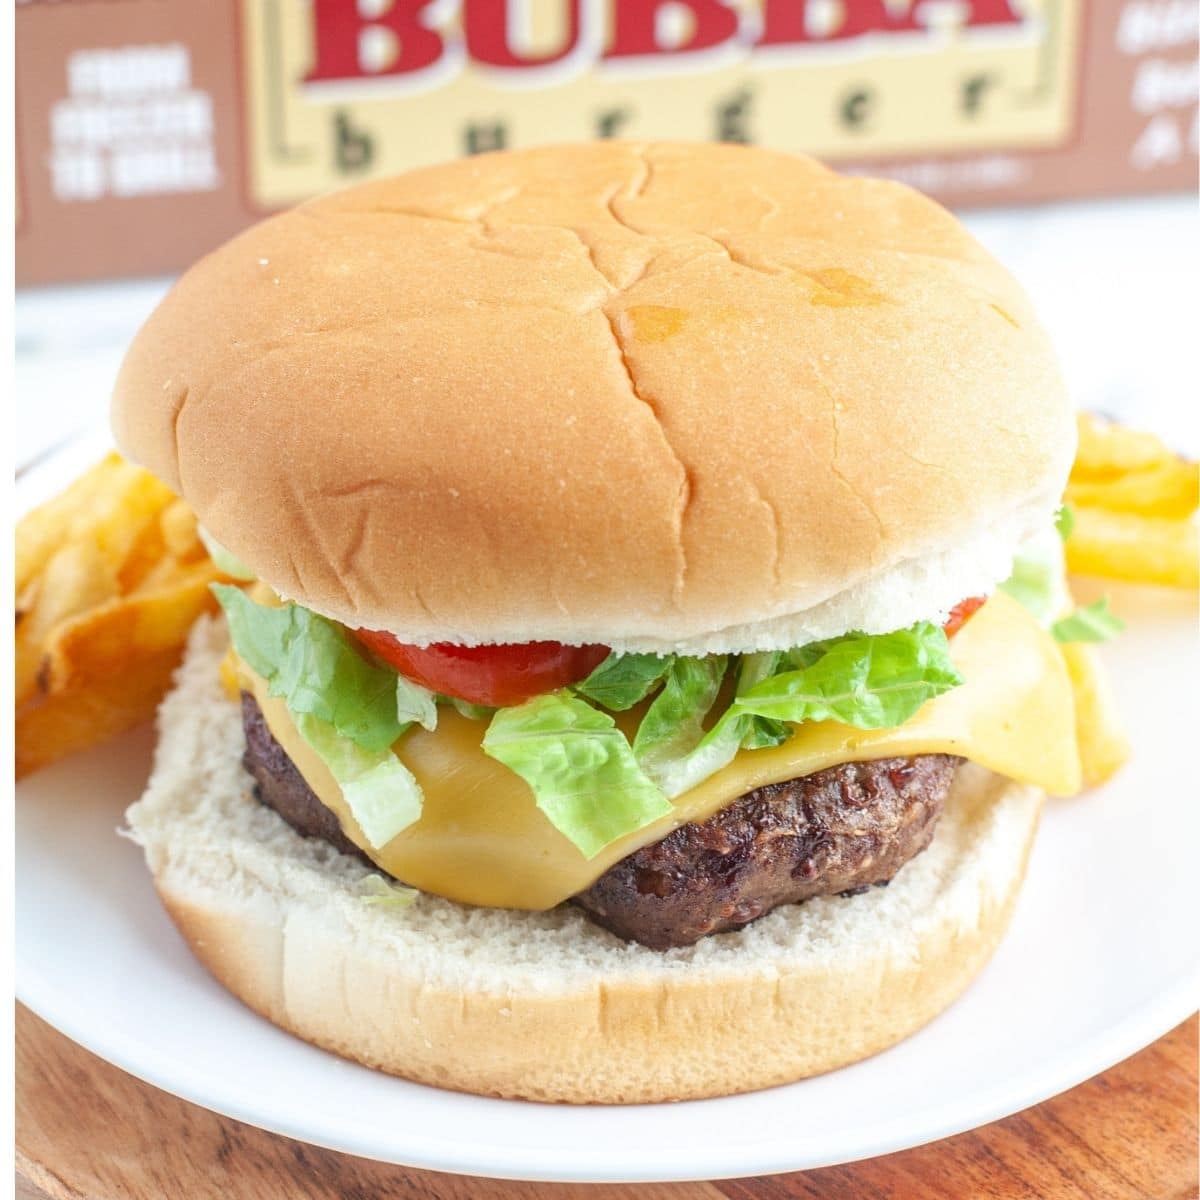 Bubba Burger Burgers, Original